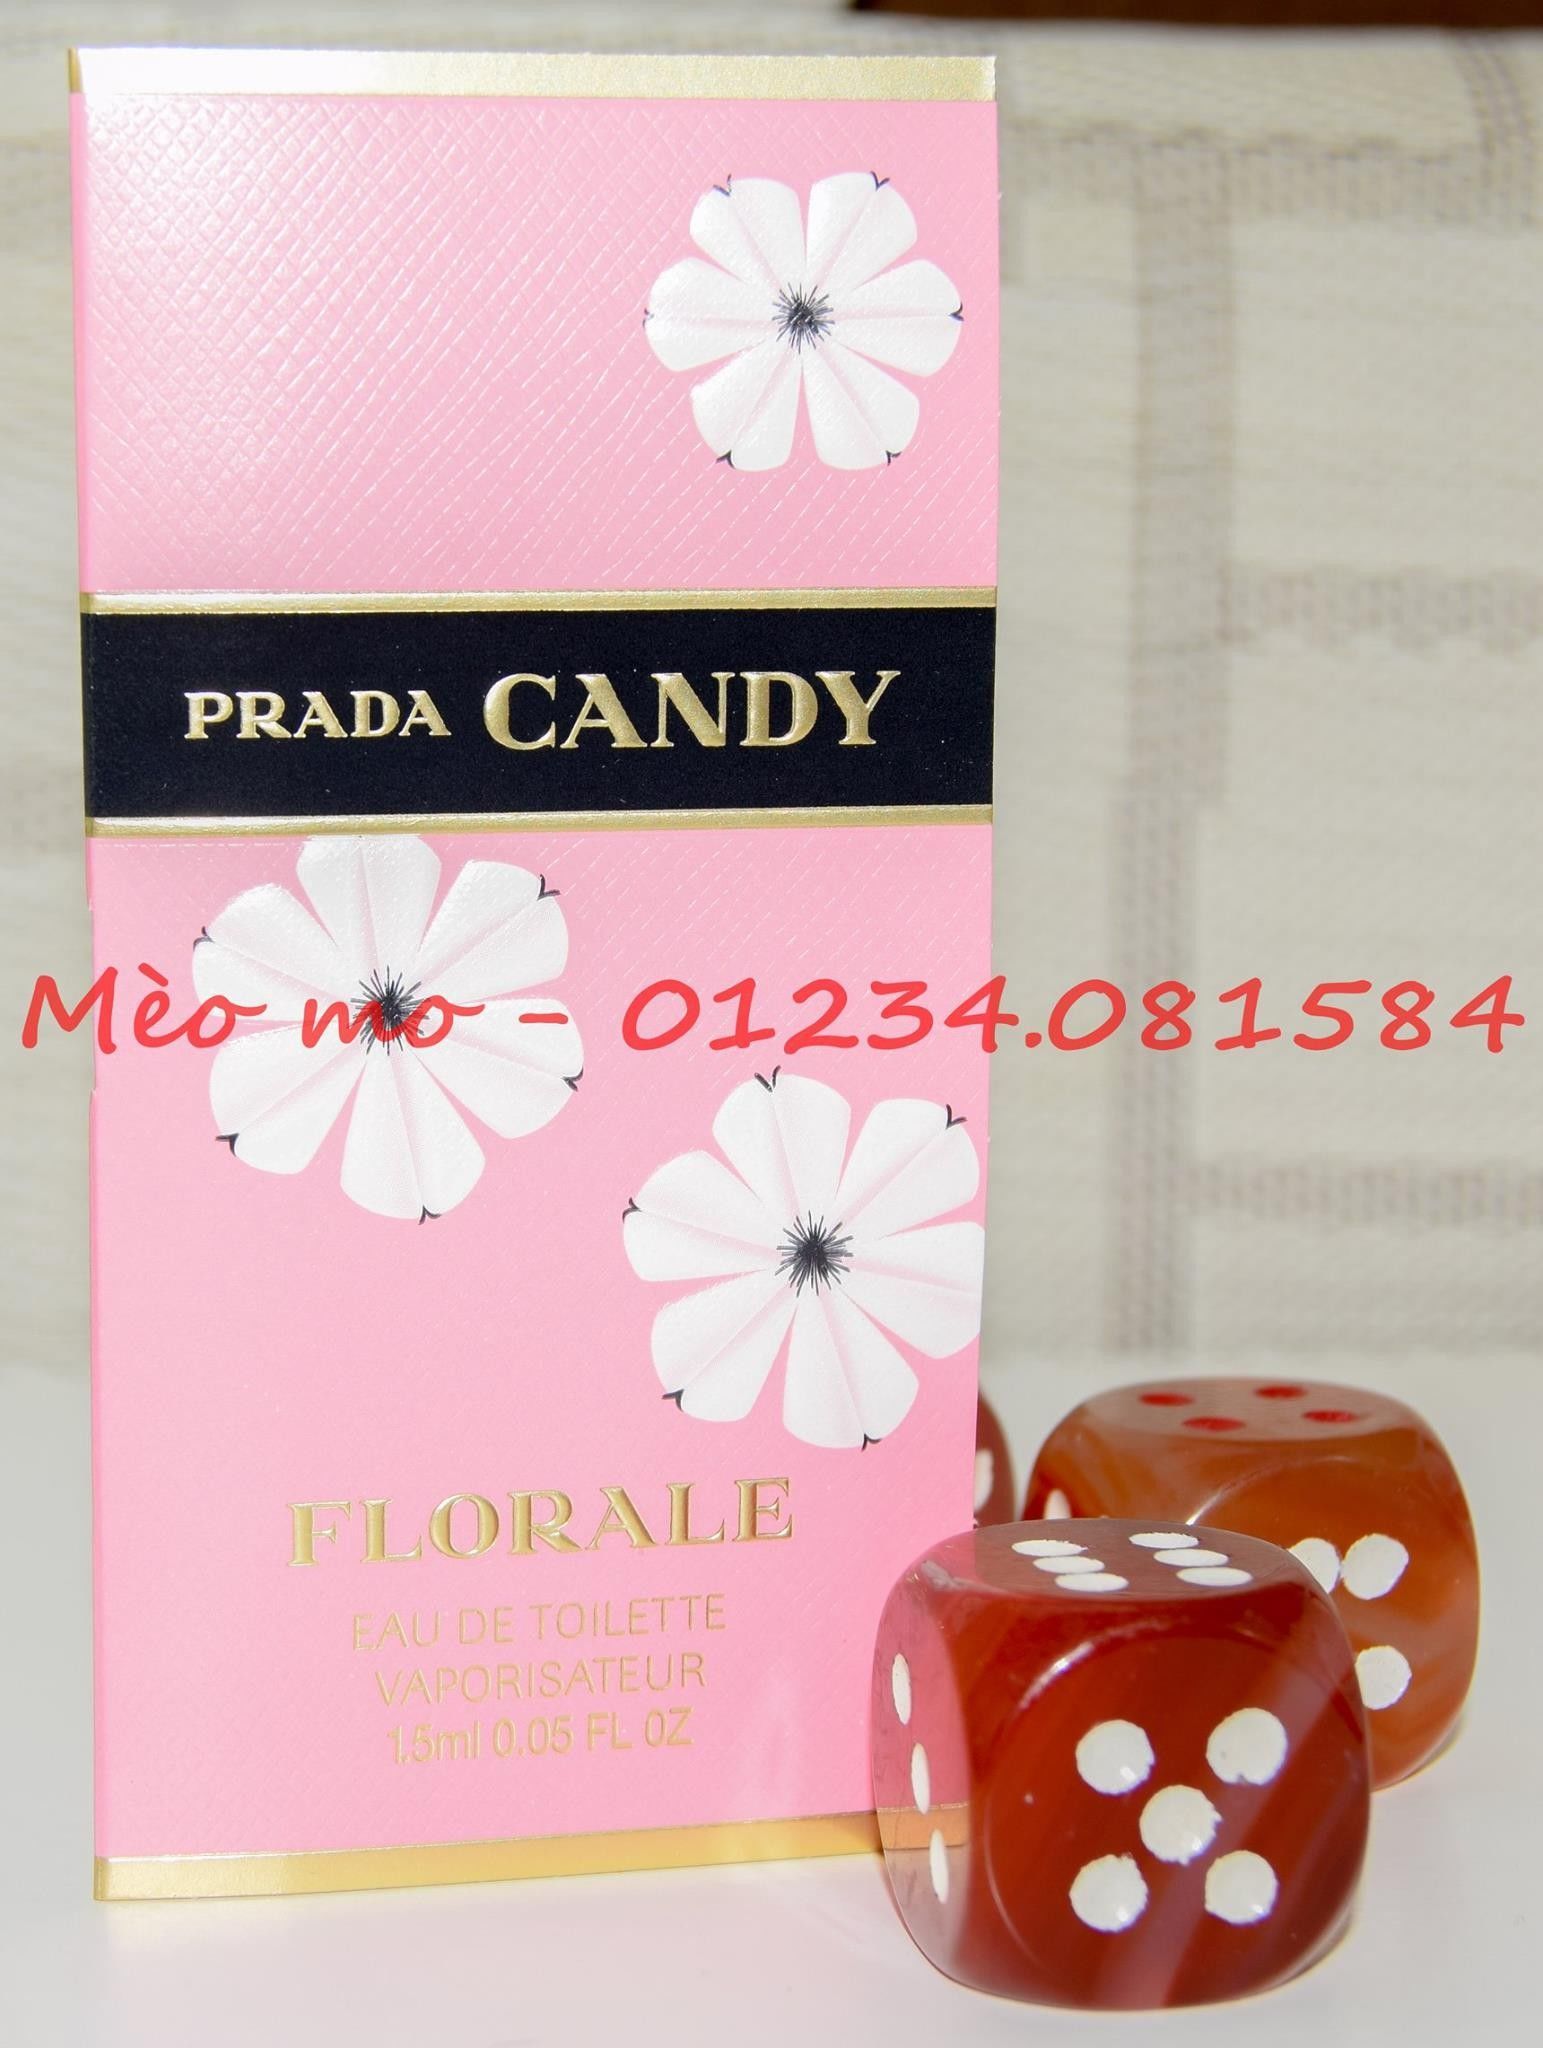 Nước hoa Prada candy - 1.5ml